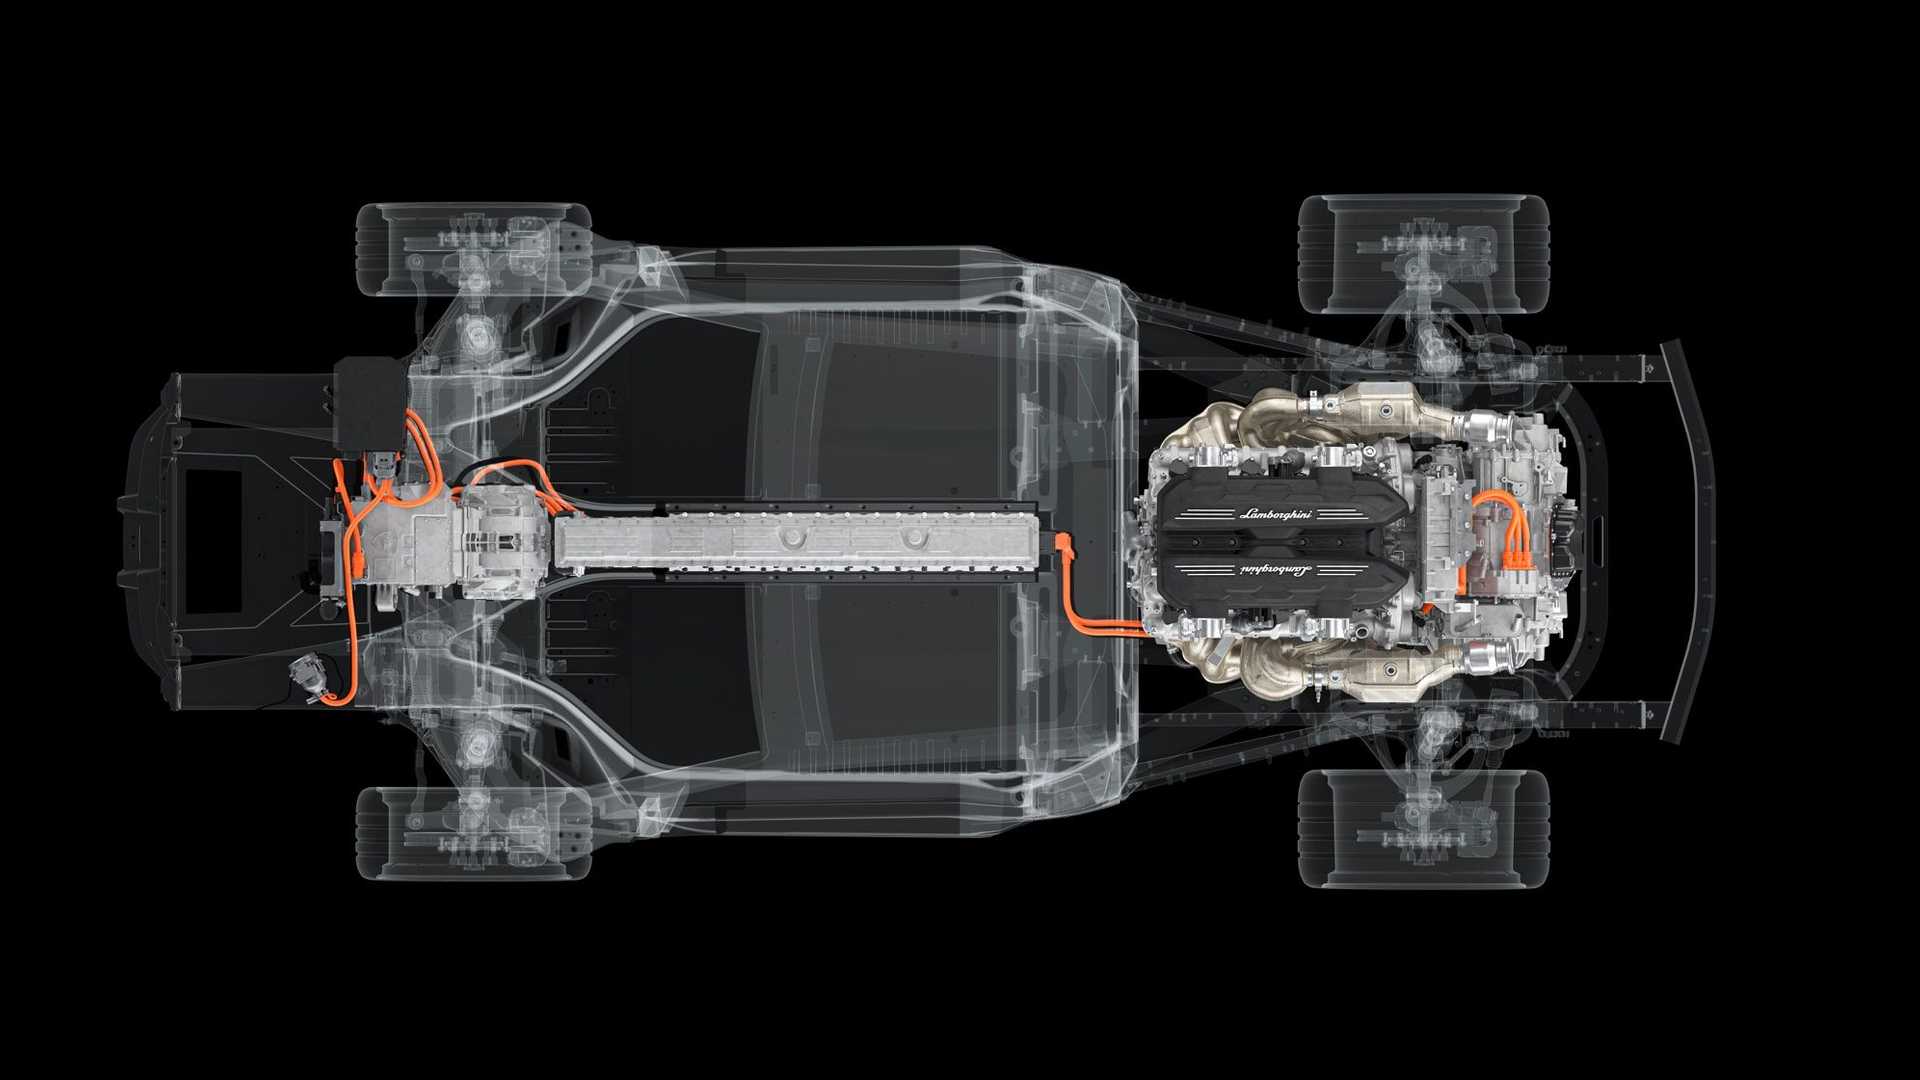 Новый флагман Lamborghini выдает 1001 л.с. за счет V12 и трех электродвигателей